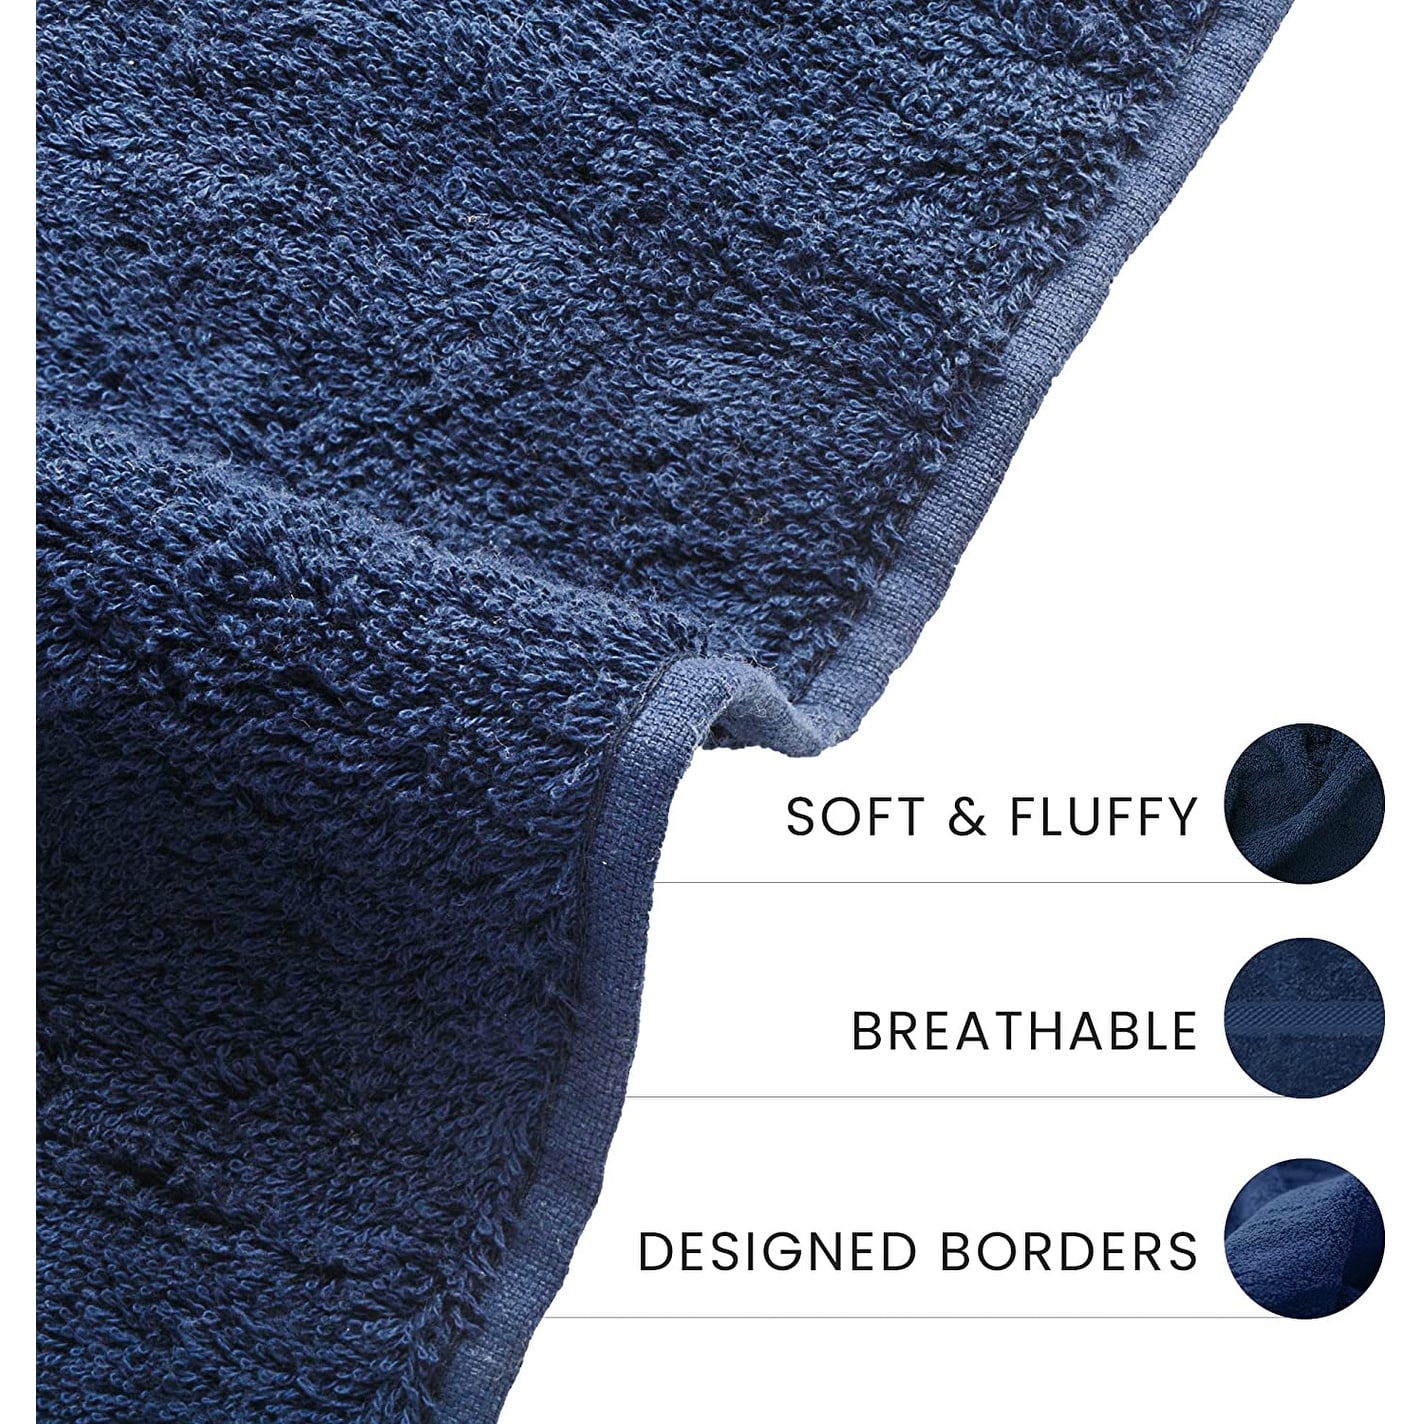 https://ak1.ostkcdn.com/images/products/is/images/direct/50af3da86049d7c0041ffe17e2794a3868c08de2/Stony-Edge-Towel-Set%2C-2-Bath-Towel%2C-2-Hand-Towel-%26-2-Face-Towels.jpg